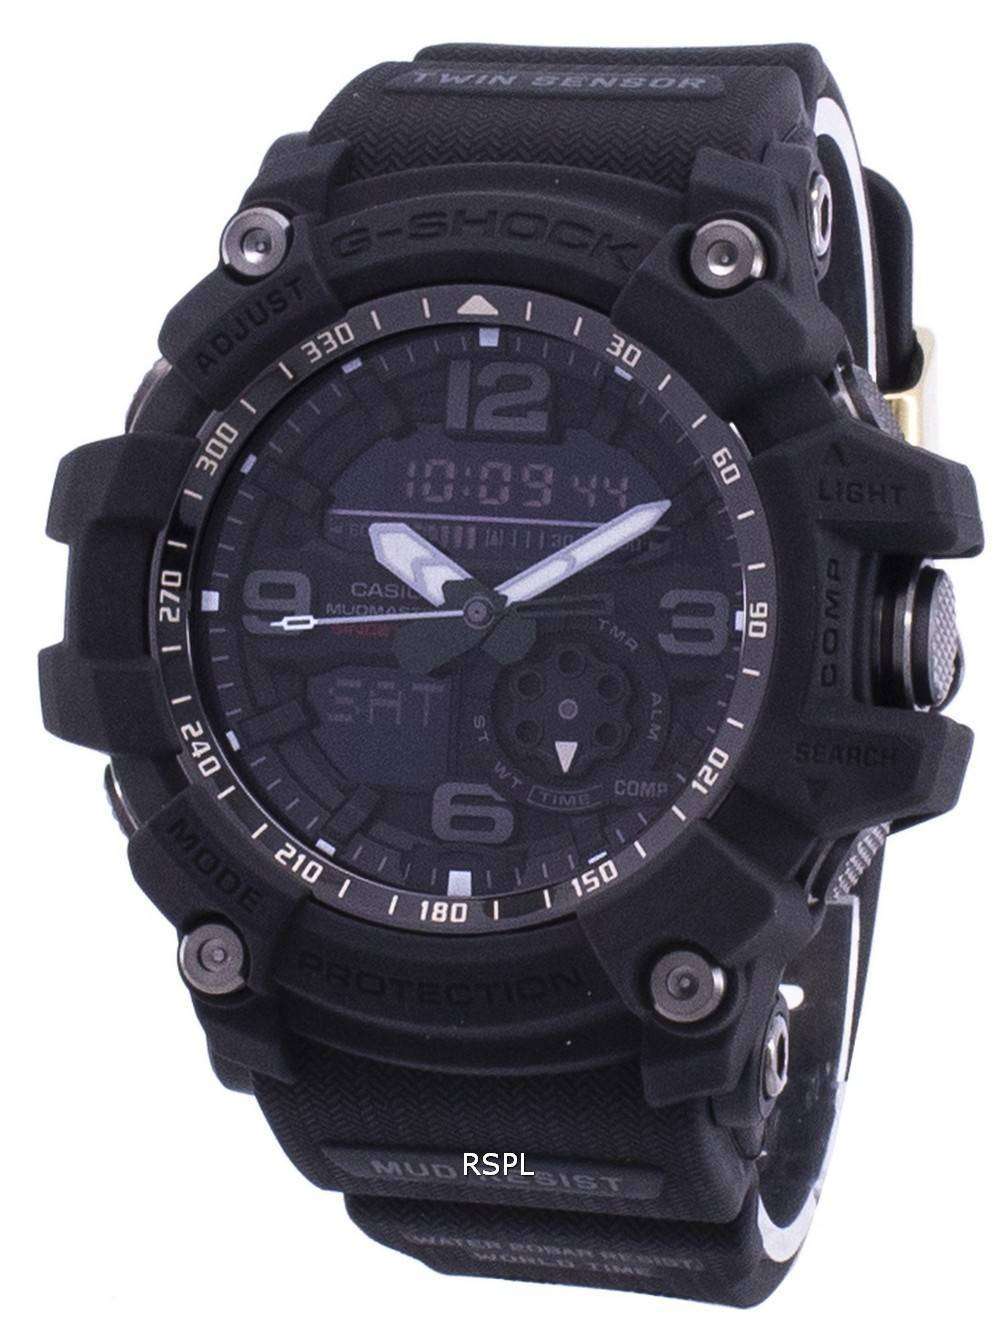 Casio G-Shock Anniversary Limited Edition Mudmaster GG-1035A-1A GG1035A-1A  Men's Watch